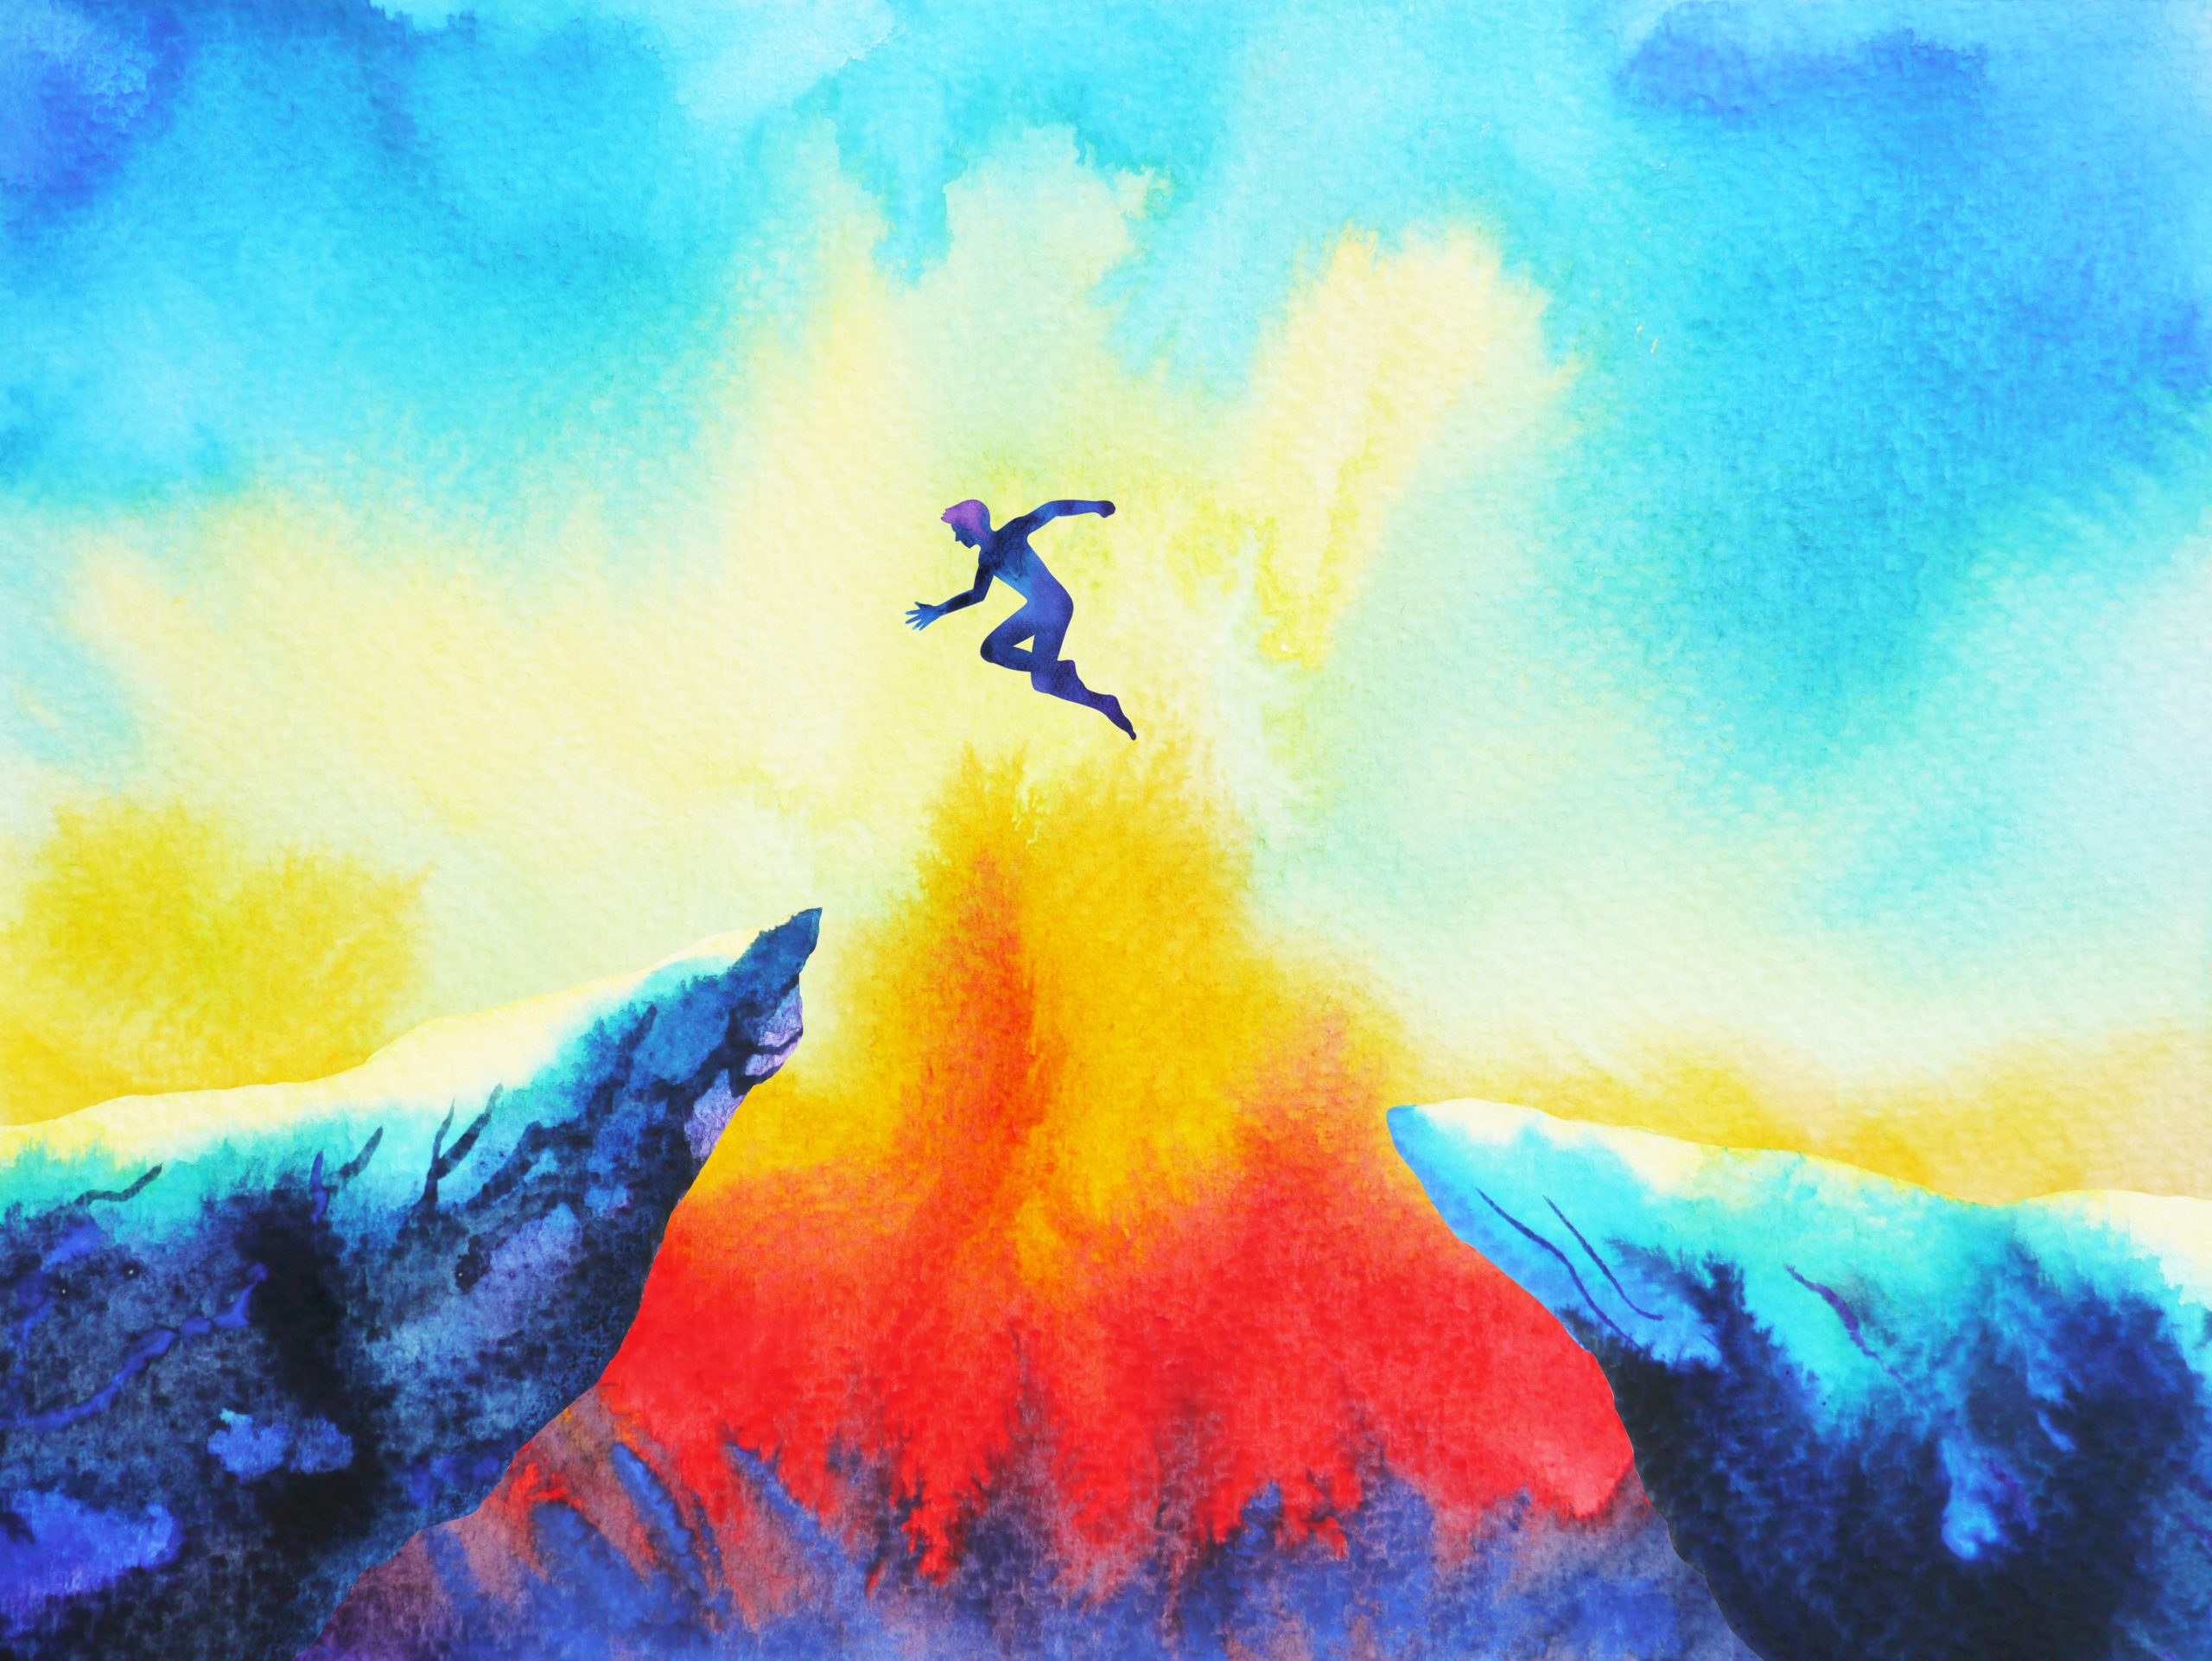 man jumping between cliffs symbolizing a FreeMind